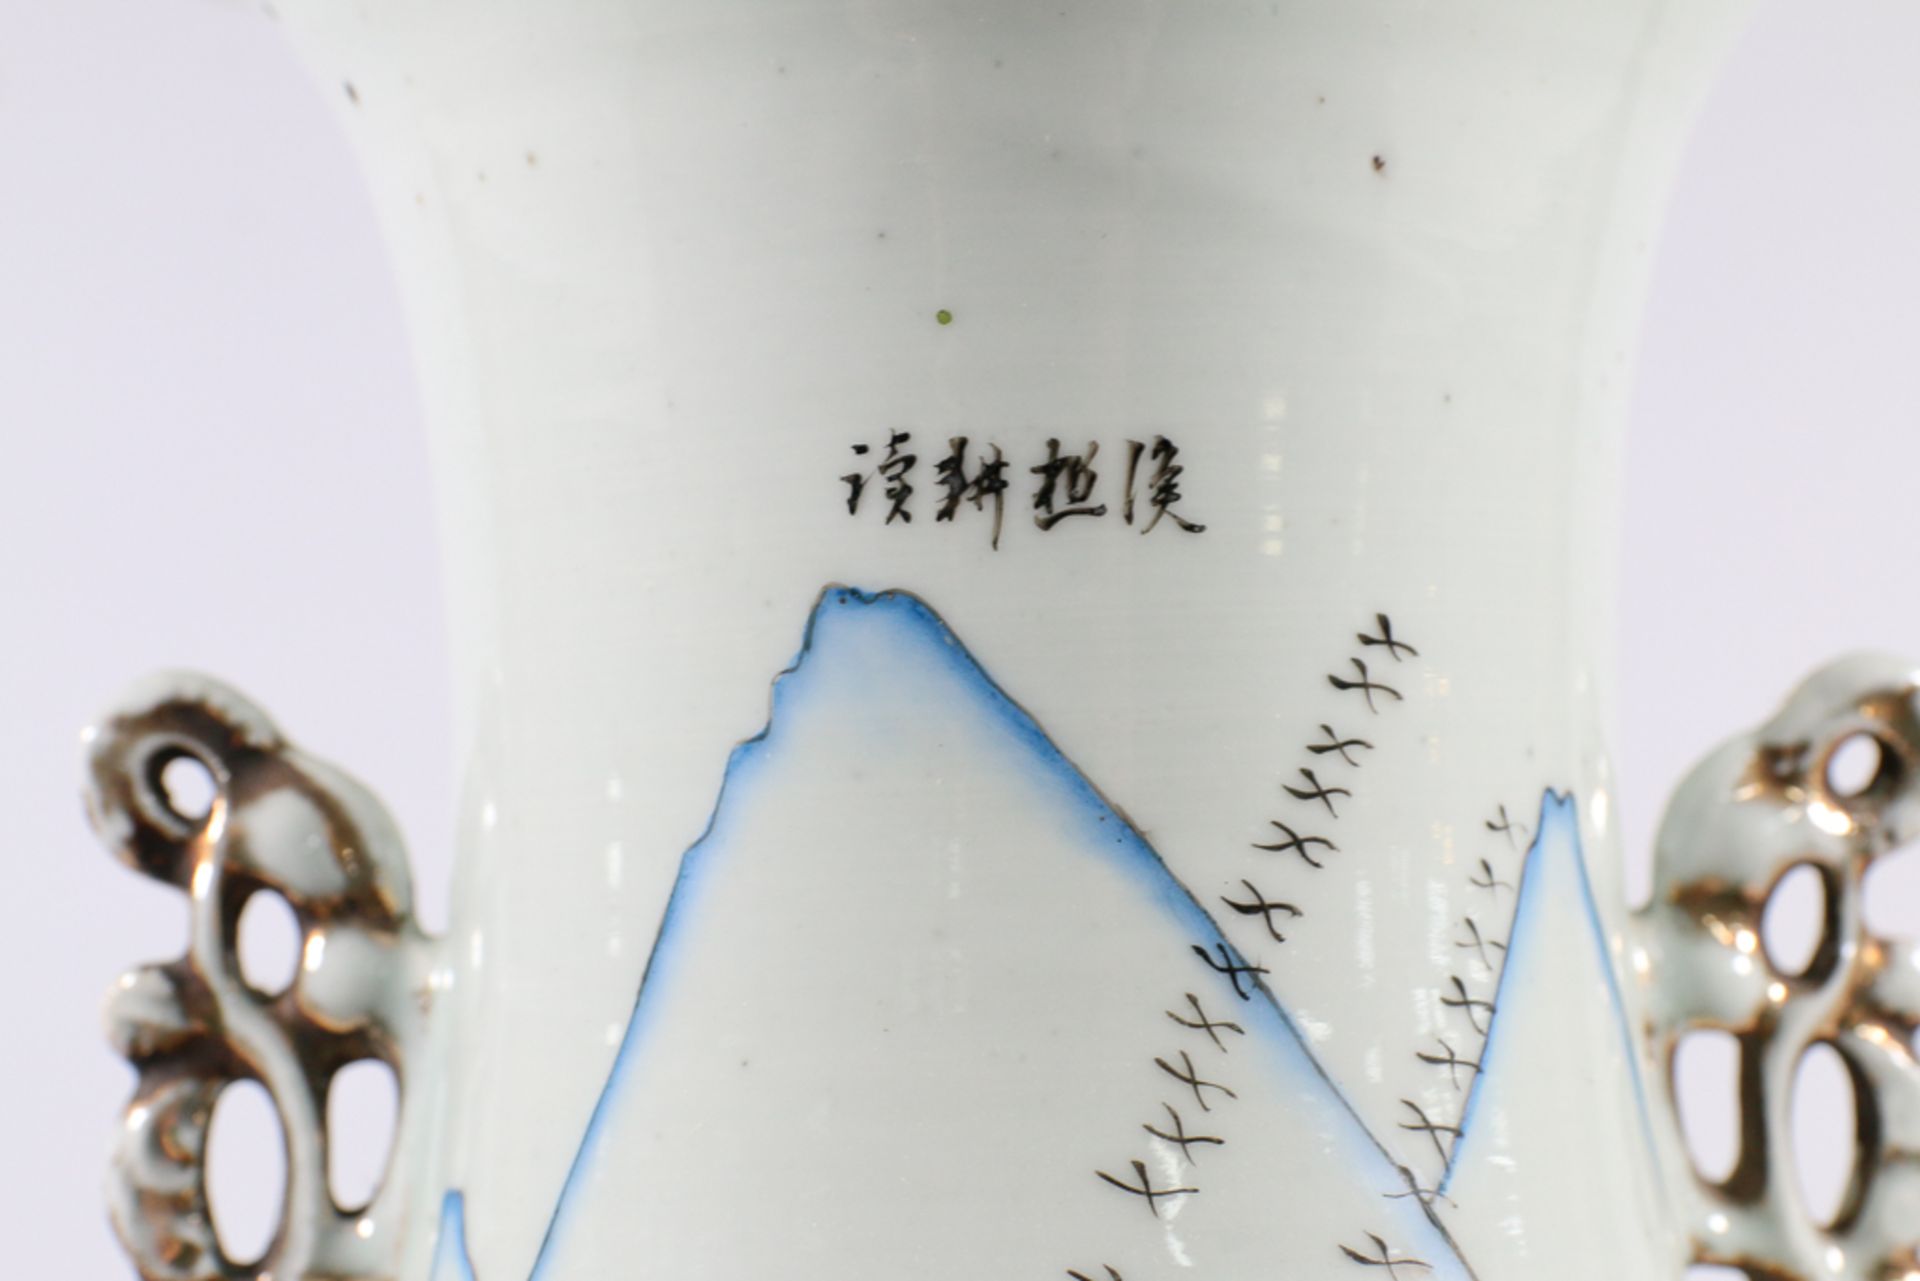 Chinese vaze - Image 14 of 15